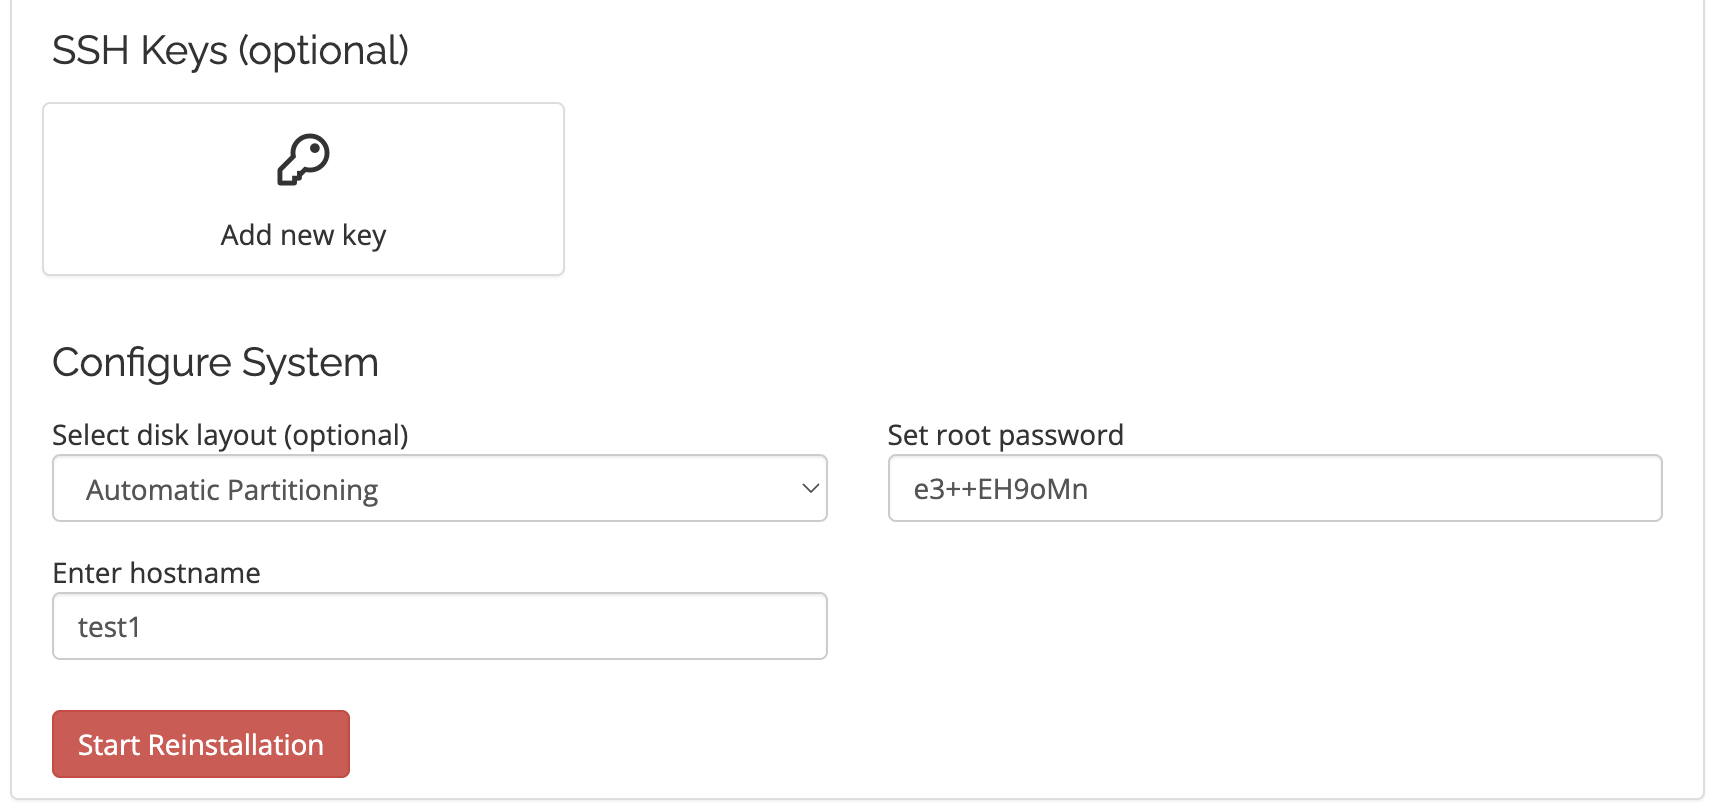 SSH Keys/Root Password